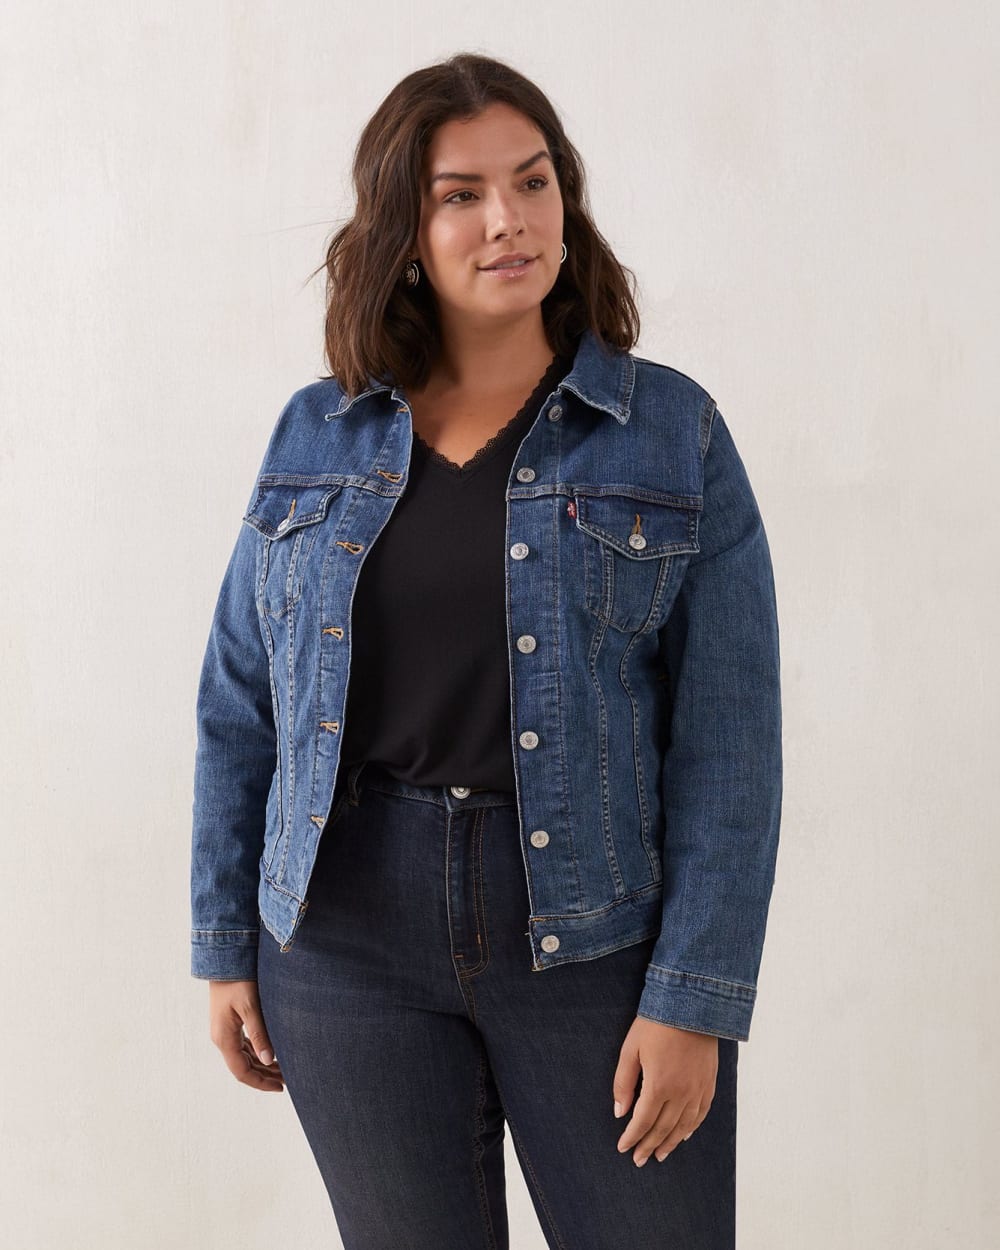 Levi's Women's Original Trucker Denim Jacket, Size: Medium, Blue